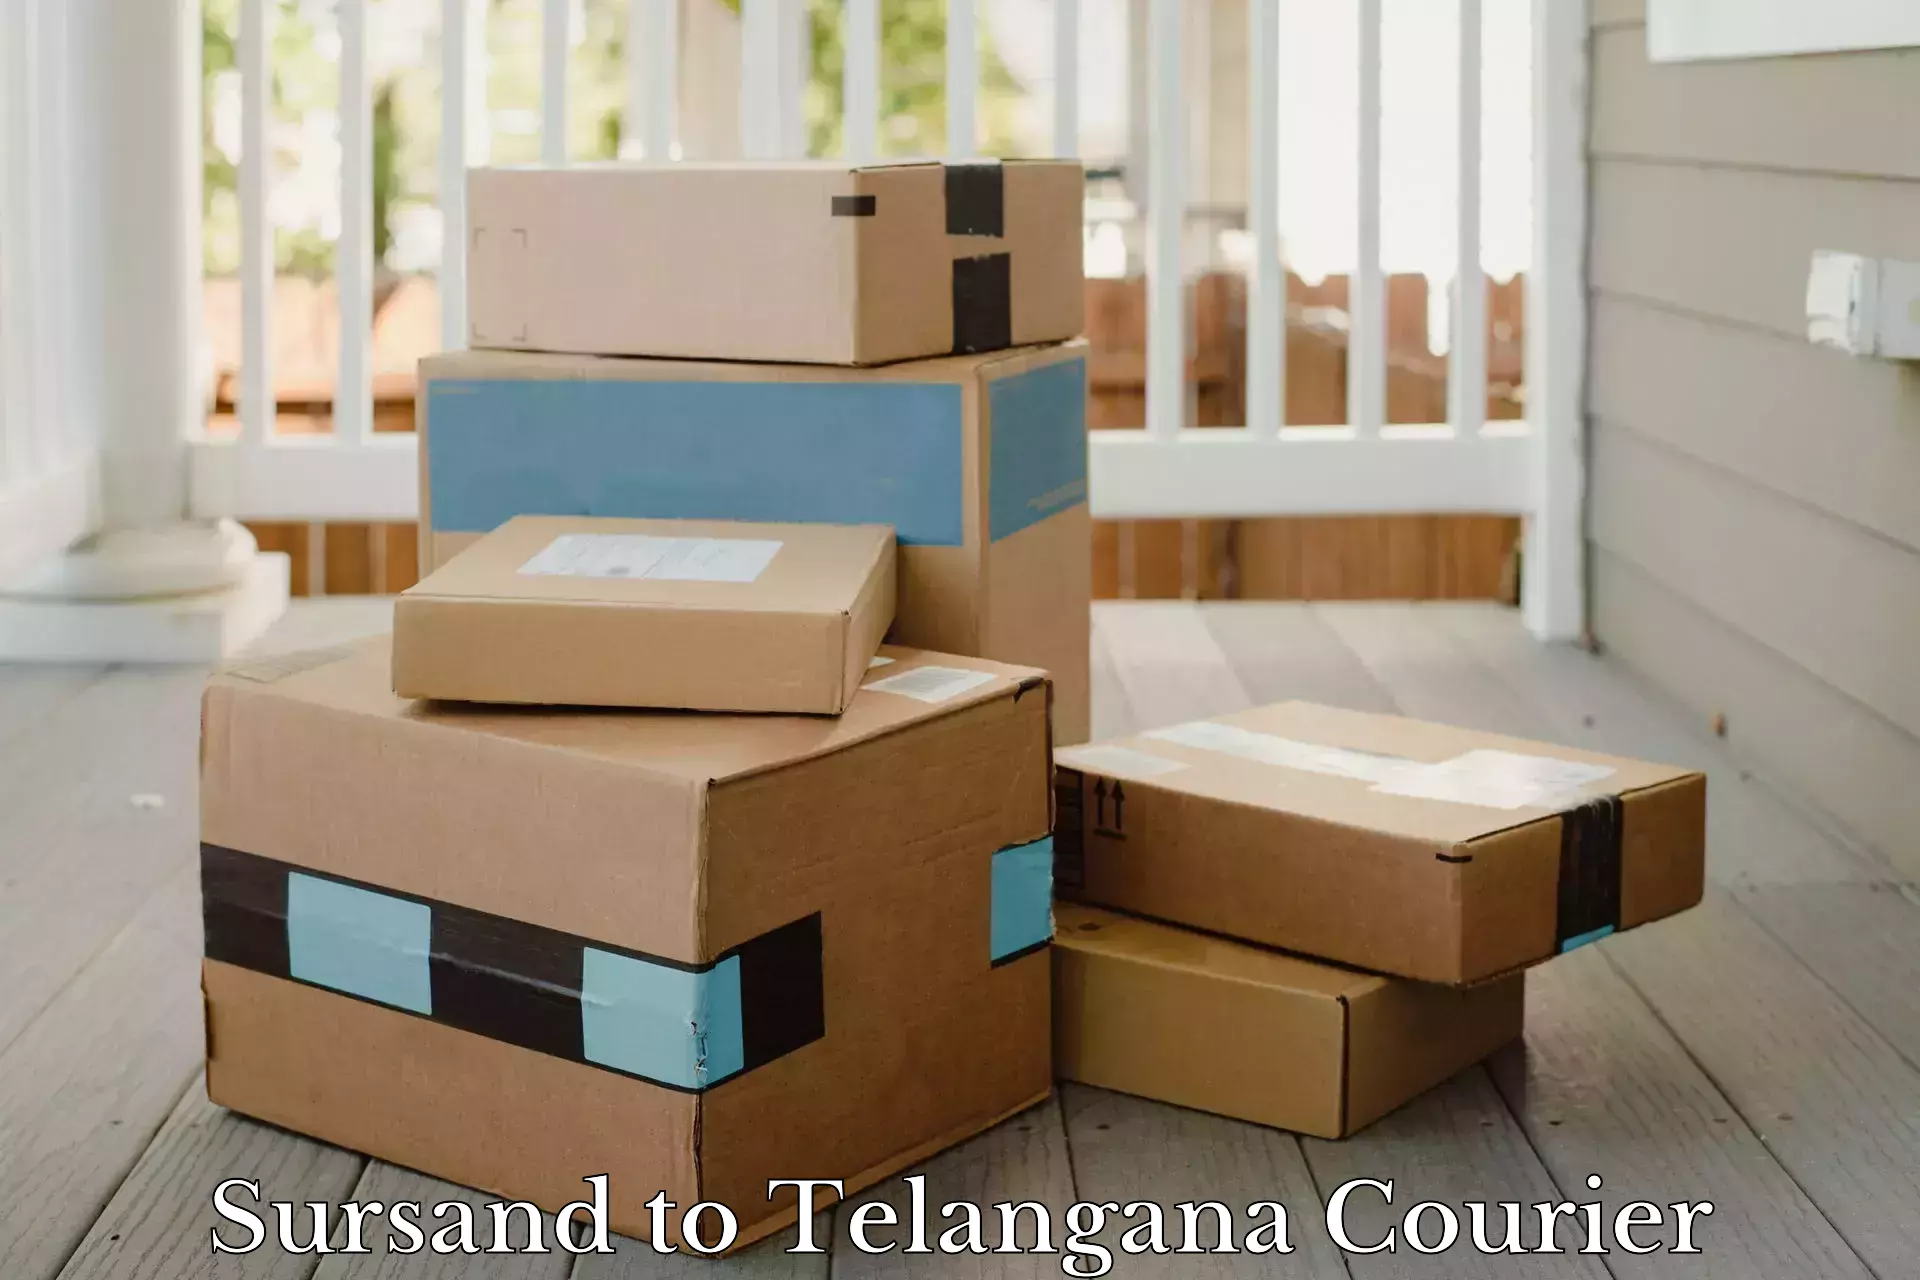 Subscription-based courier Sursand to Vikarabad